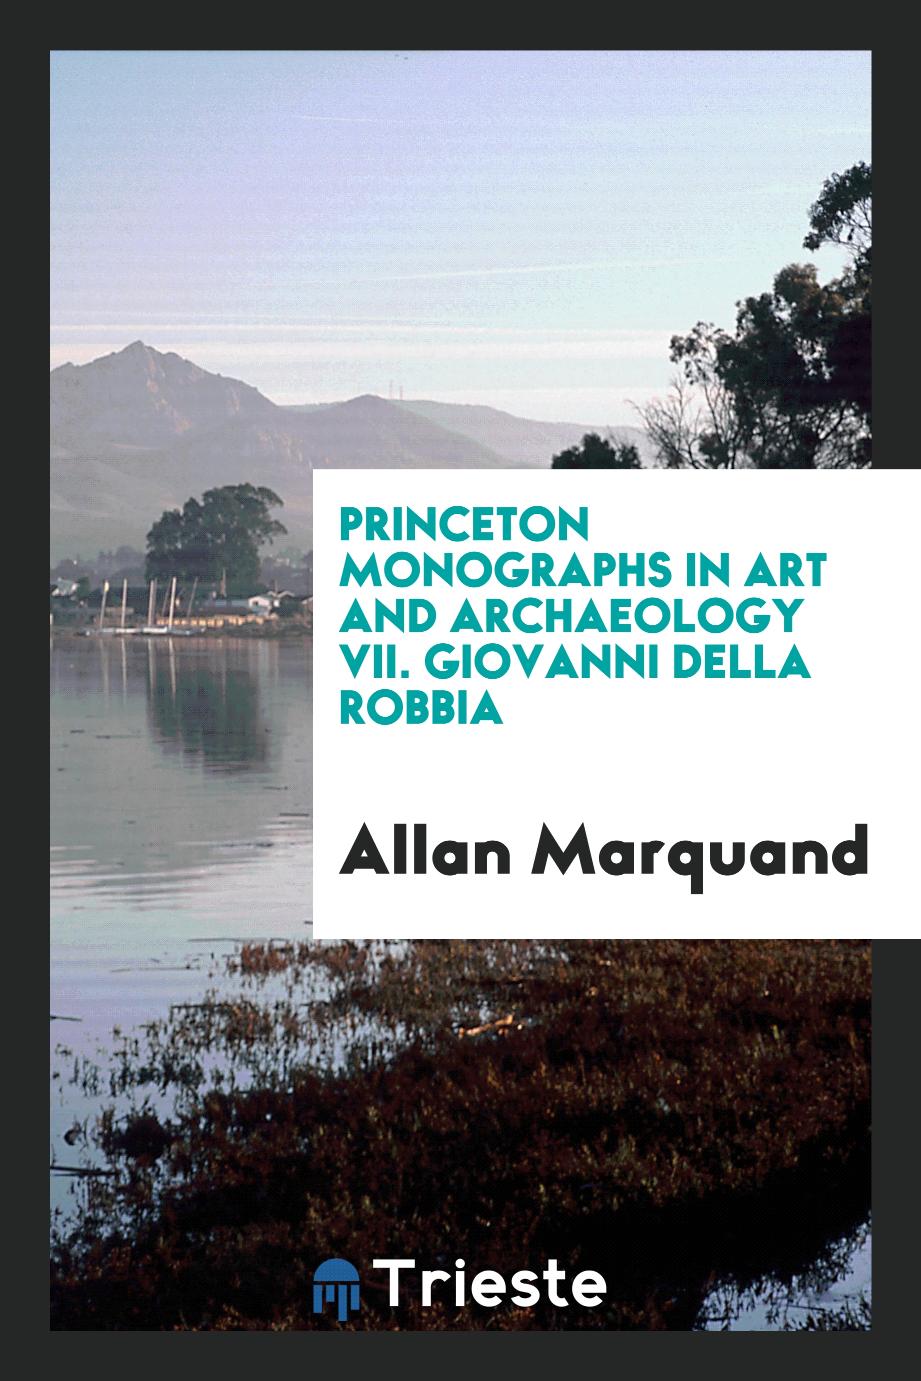 Princeton Monographs in Art and Archaeology VII. Giovanni Della Robbia